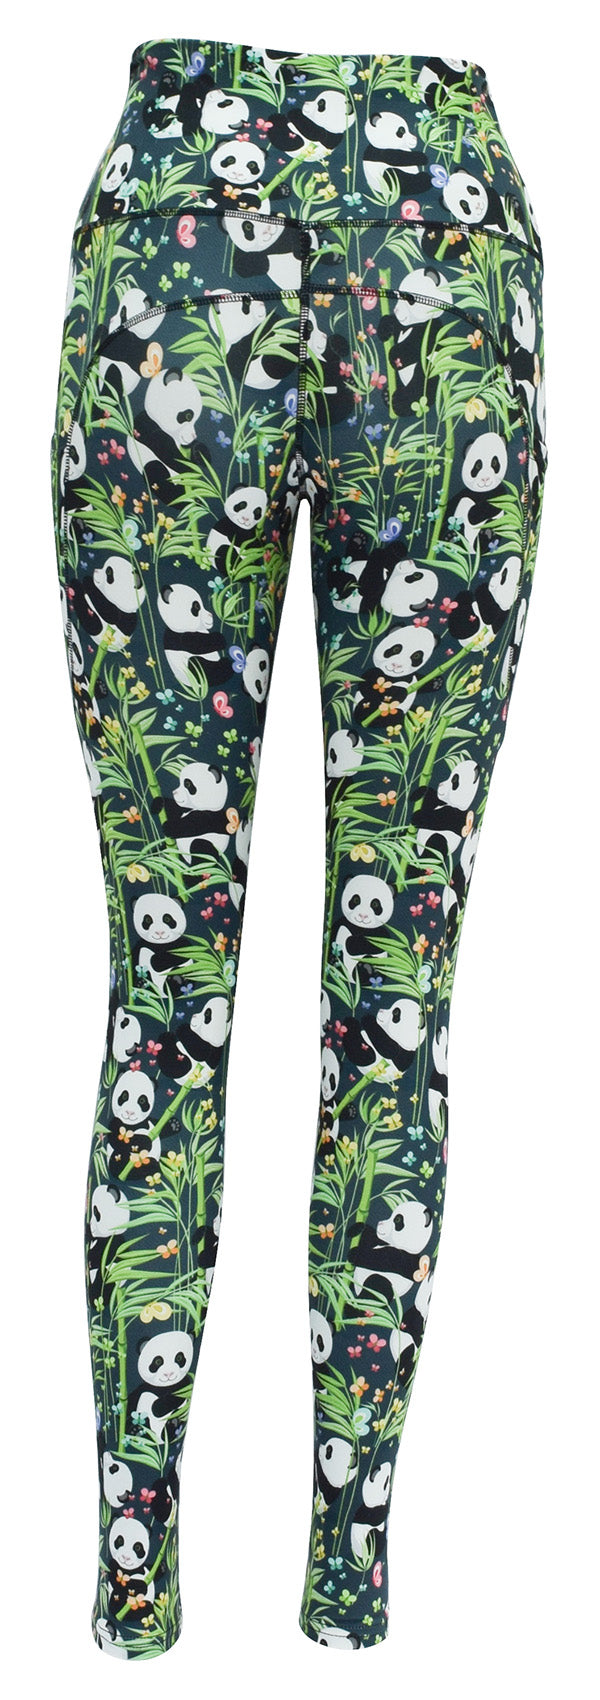 Panda On The Loose + Pockets-Adult Pocket Leggings